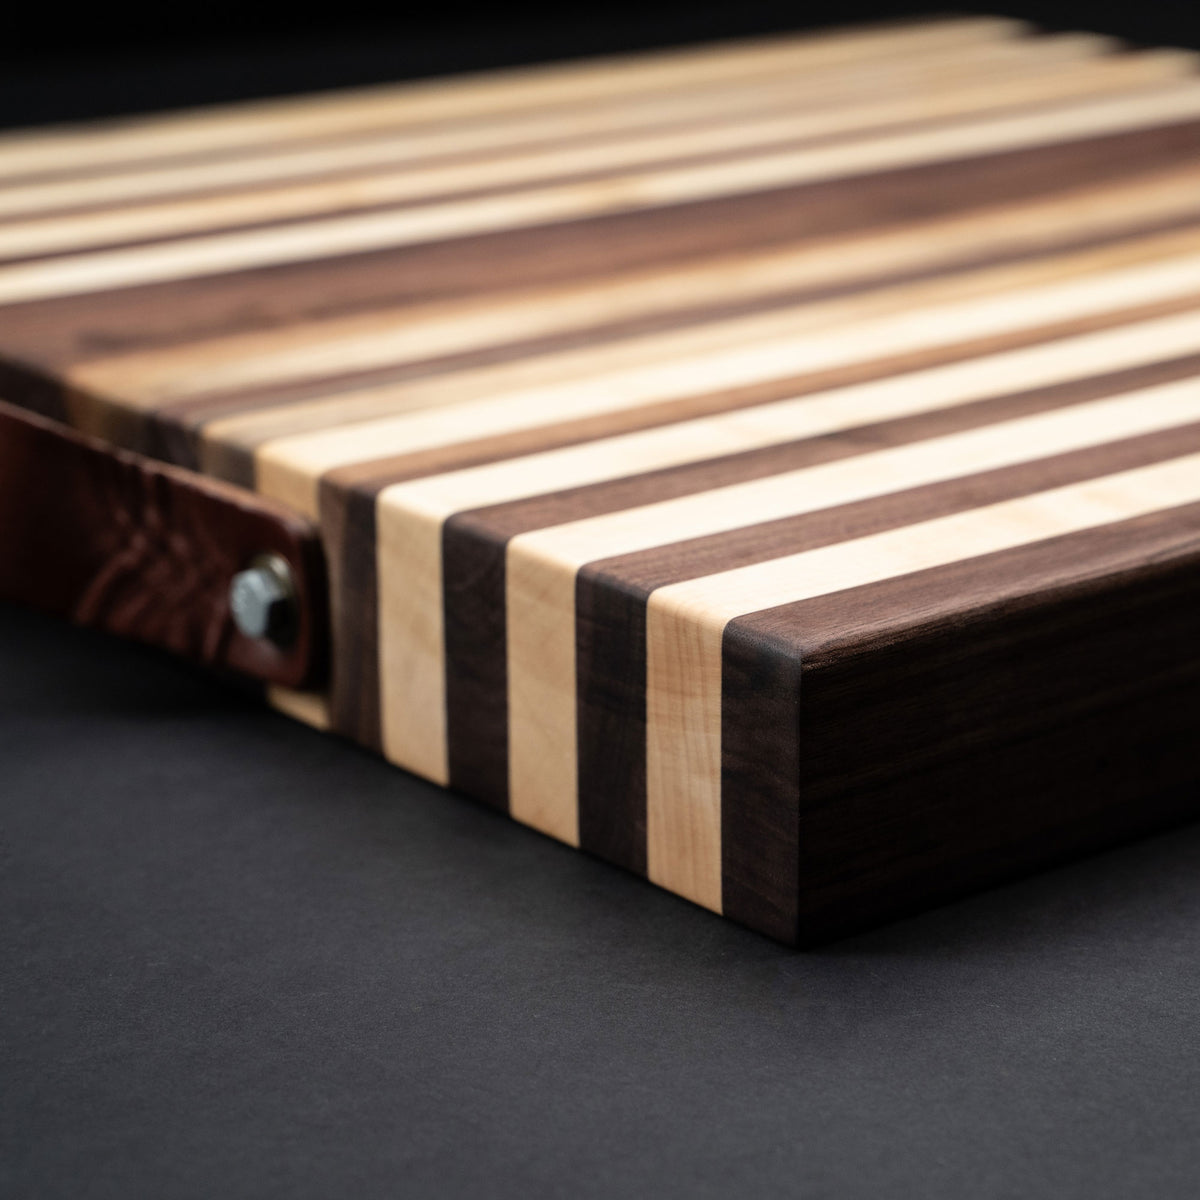 American Maple &amp; Walnut Wood Striped Butcher Block Cutting Board